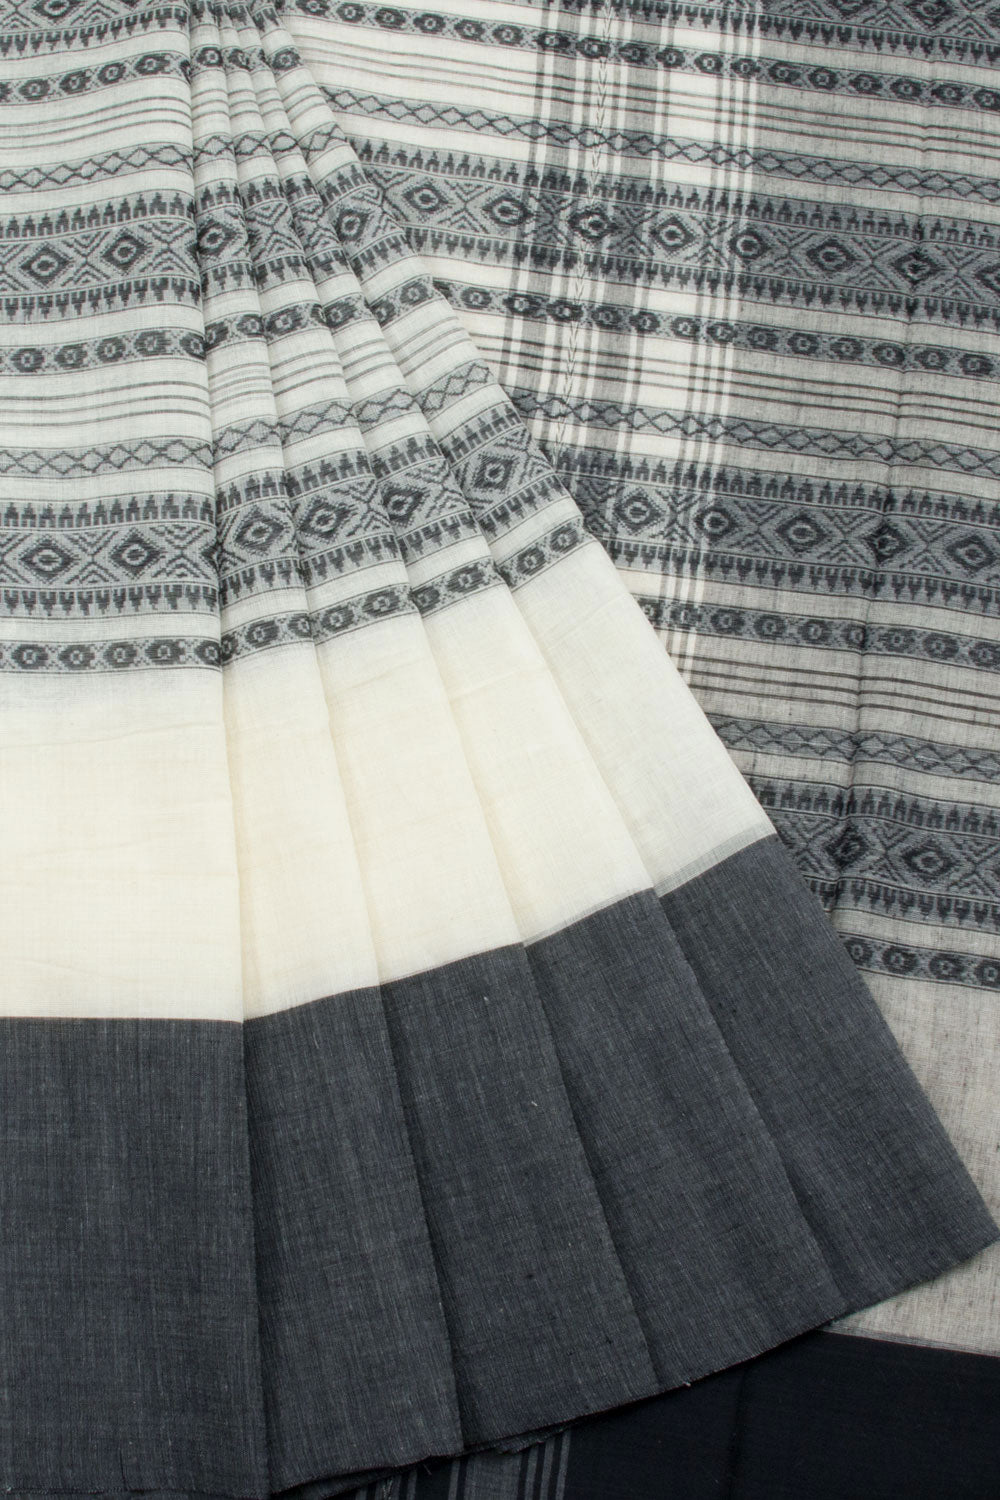 Black & White Handloom Dhaniakhali Cotton Saree 10062592